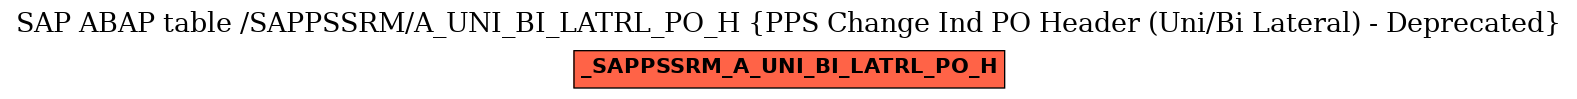 E-R Diagram for table /SAPPSSRM/A_UNI_BI_LATRL_PO_H (PPS Change Ind PO Header (Uni/Bi Lateral) - Deprecated)